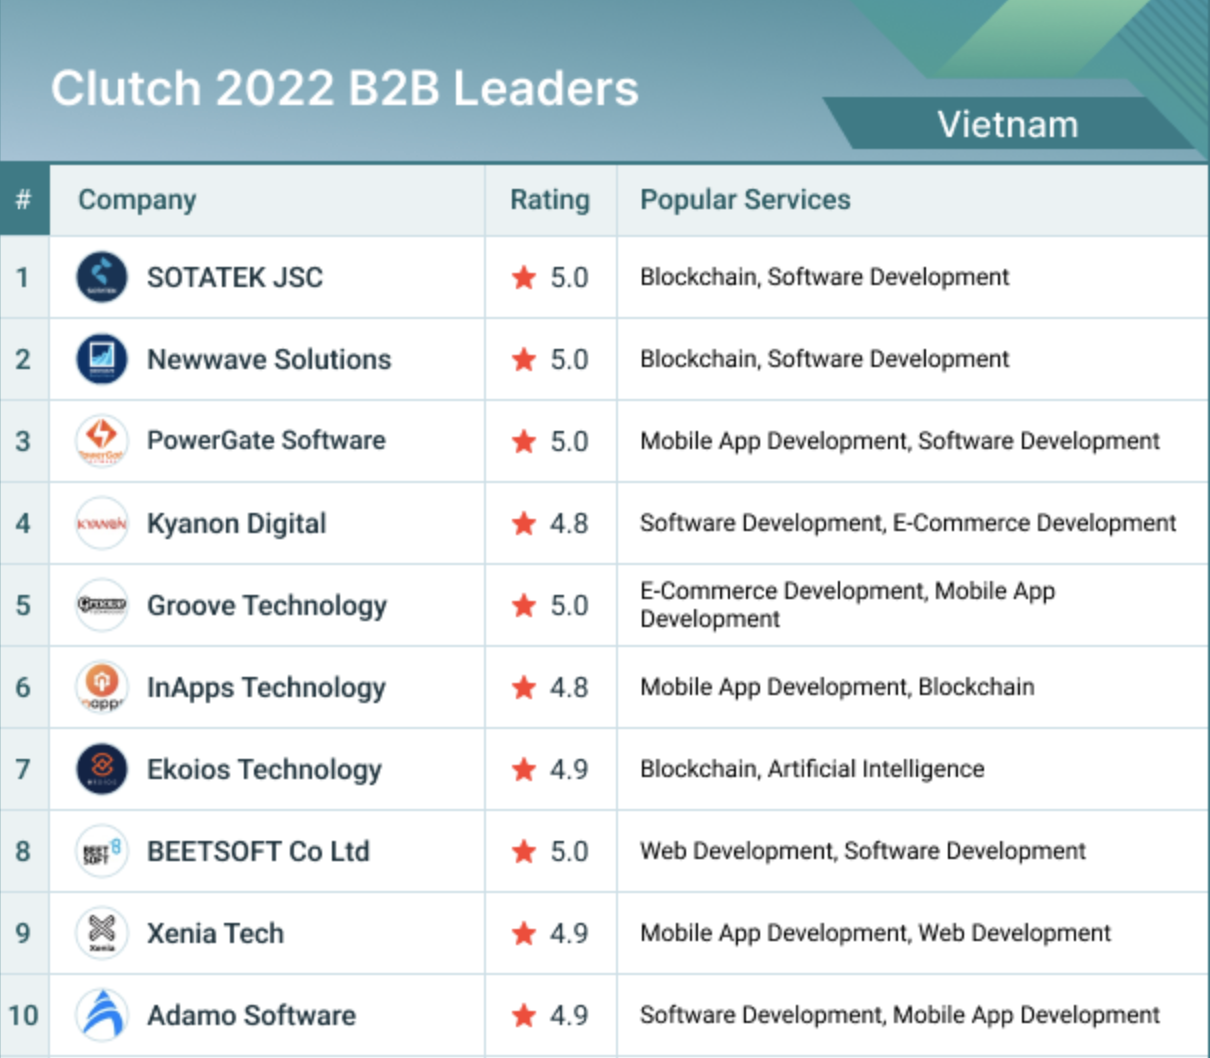 Clutch Names Kyanon Digital Among Vietnam’s Leading B2B Service Providers for 2022 3